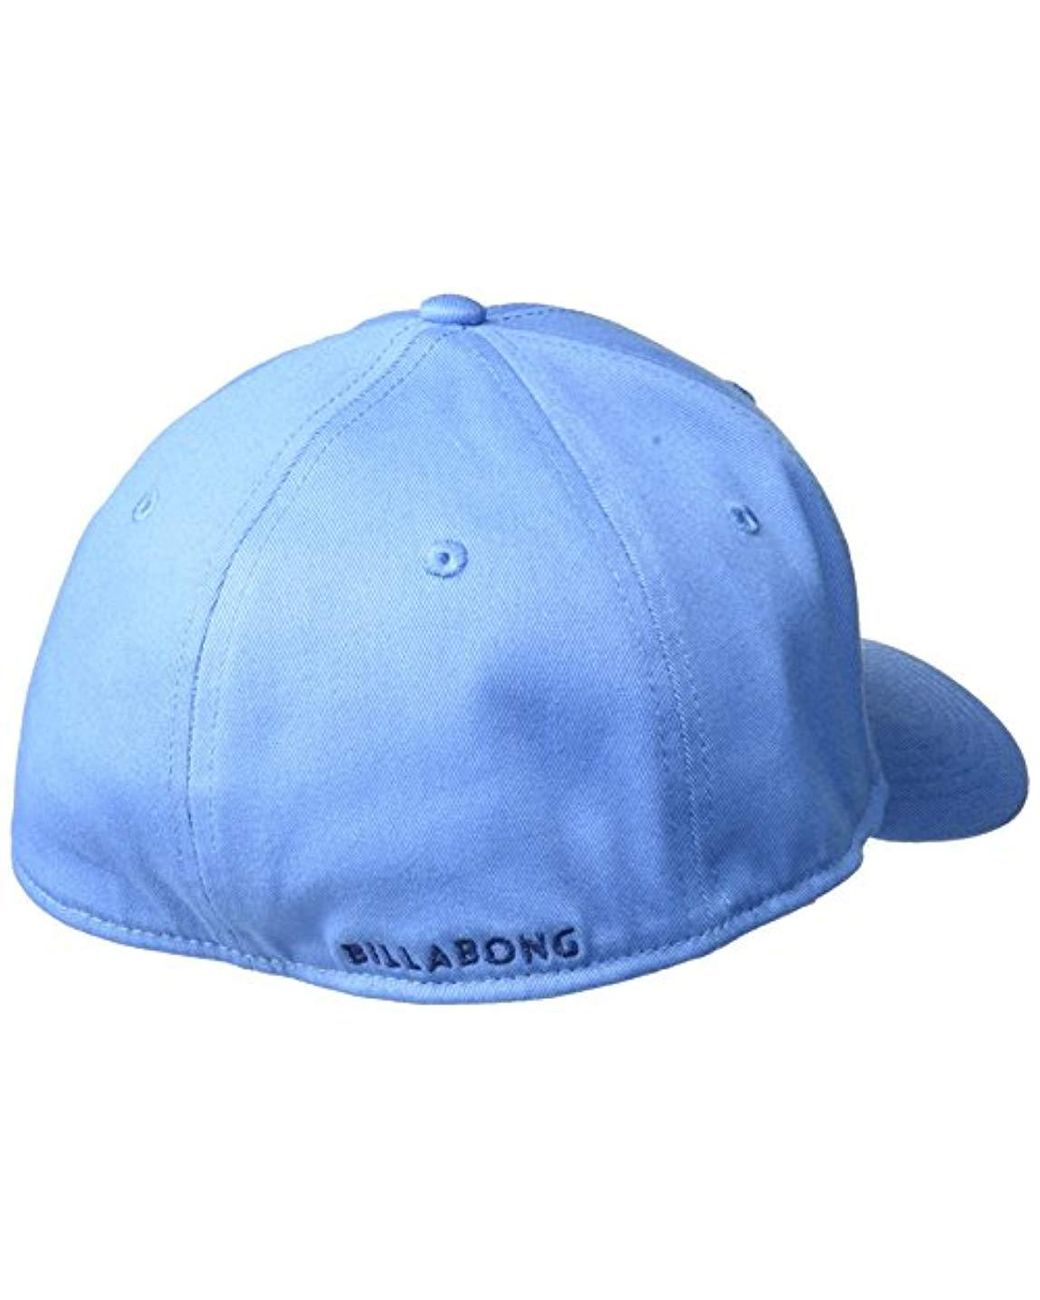 Billabong DETOX Navy Blue Grey Logo One Size A-Flex Youth Baseball Cap Boy's Hat 